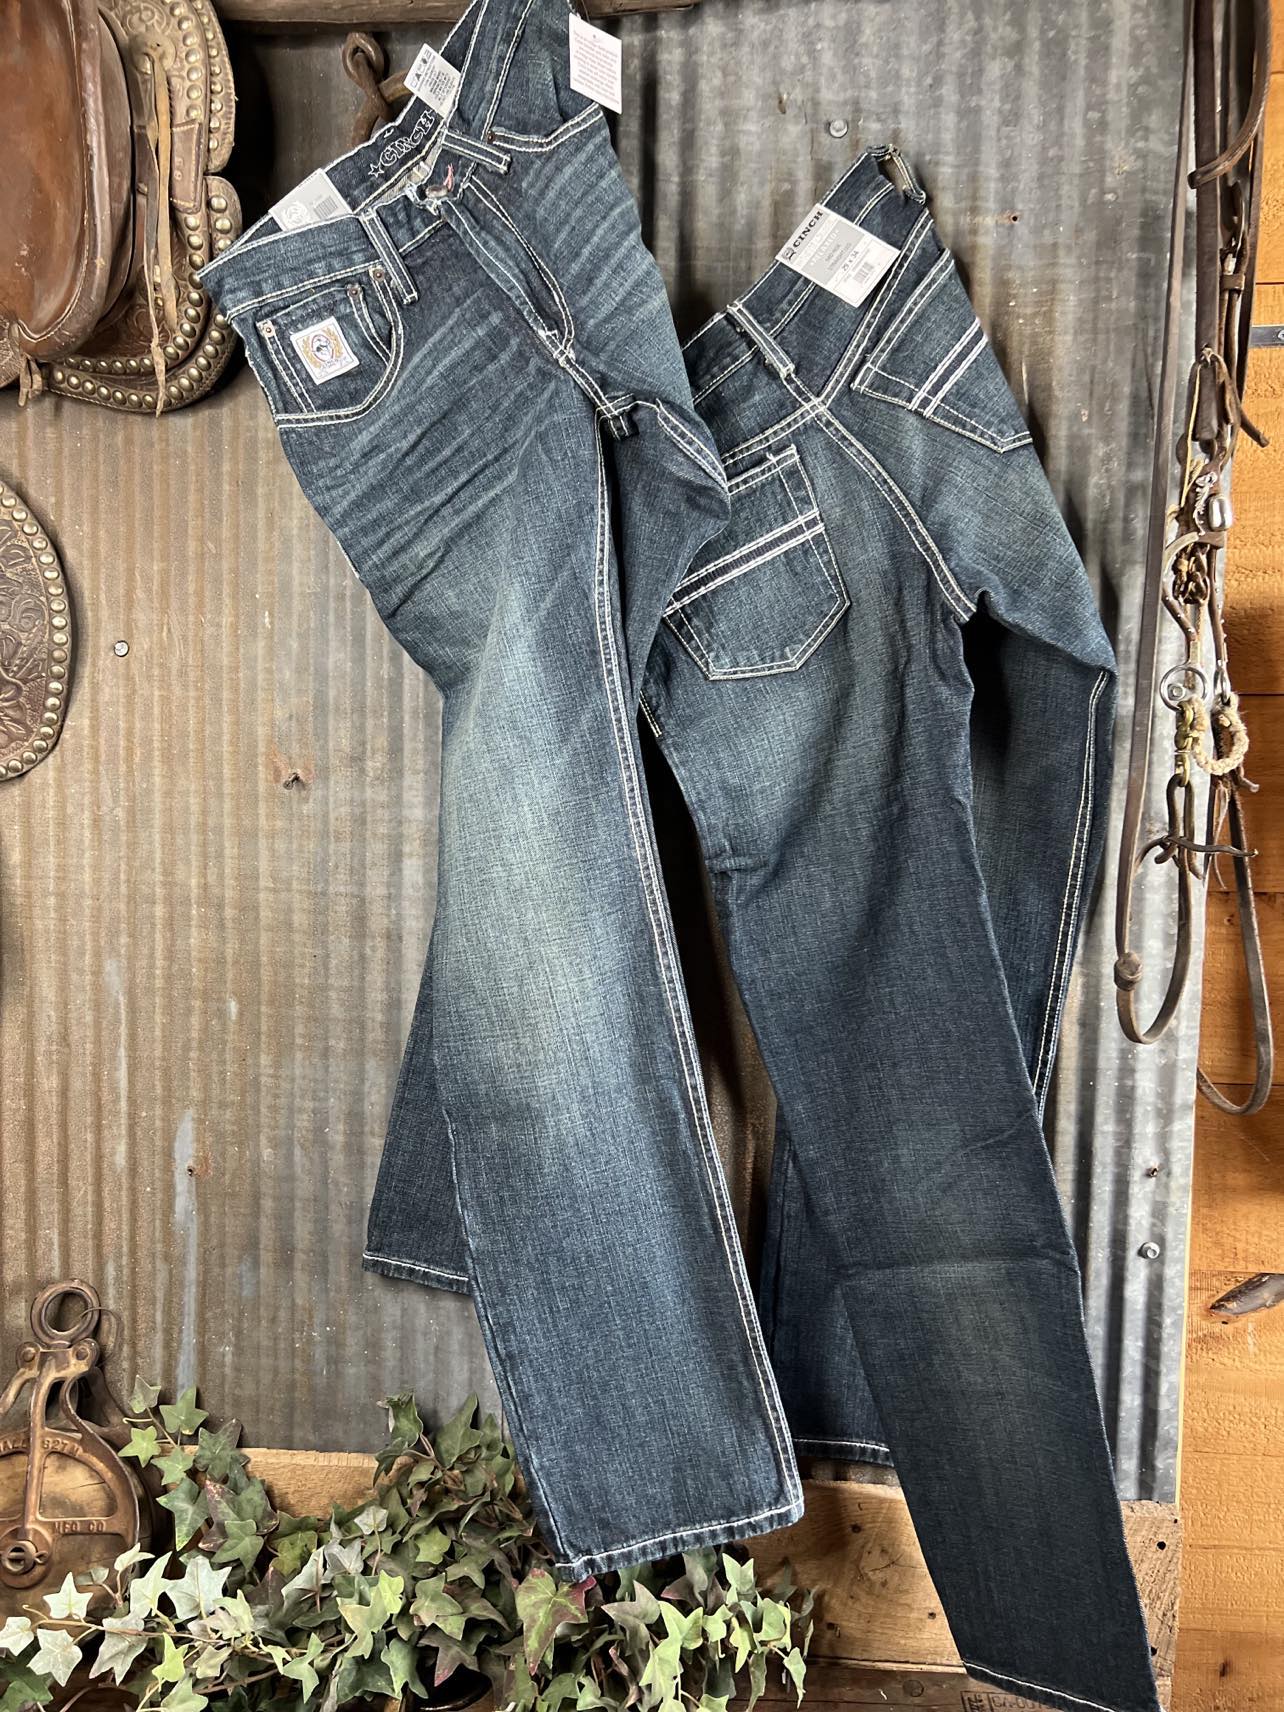 Men's Cinch Stanley Jeans-Men's Denim-Cinch-Lucky J Boots & More, Women's, Men's, & Kids Western Store Located in Carthage, MO